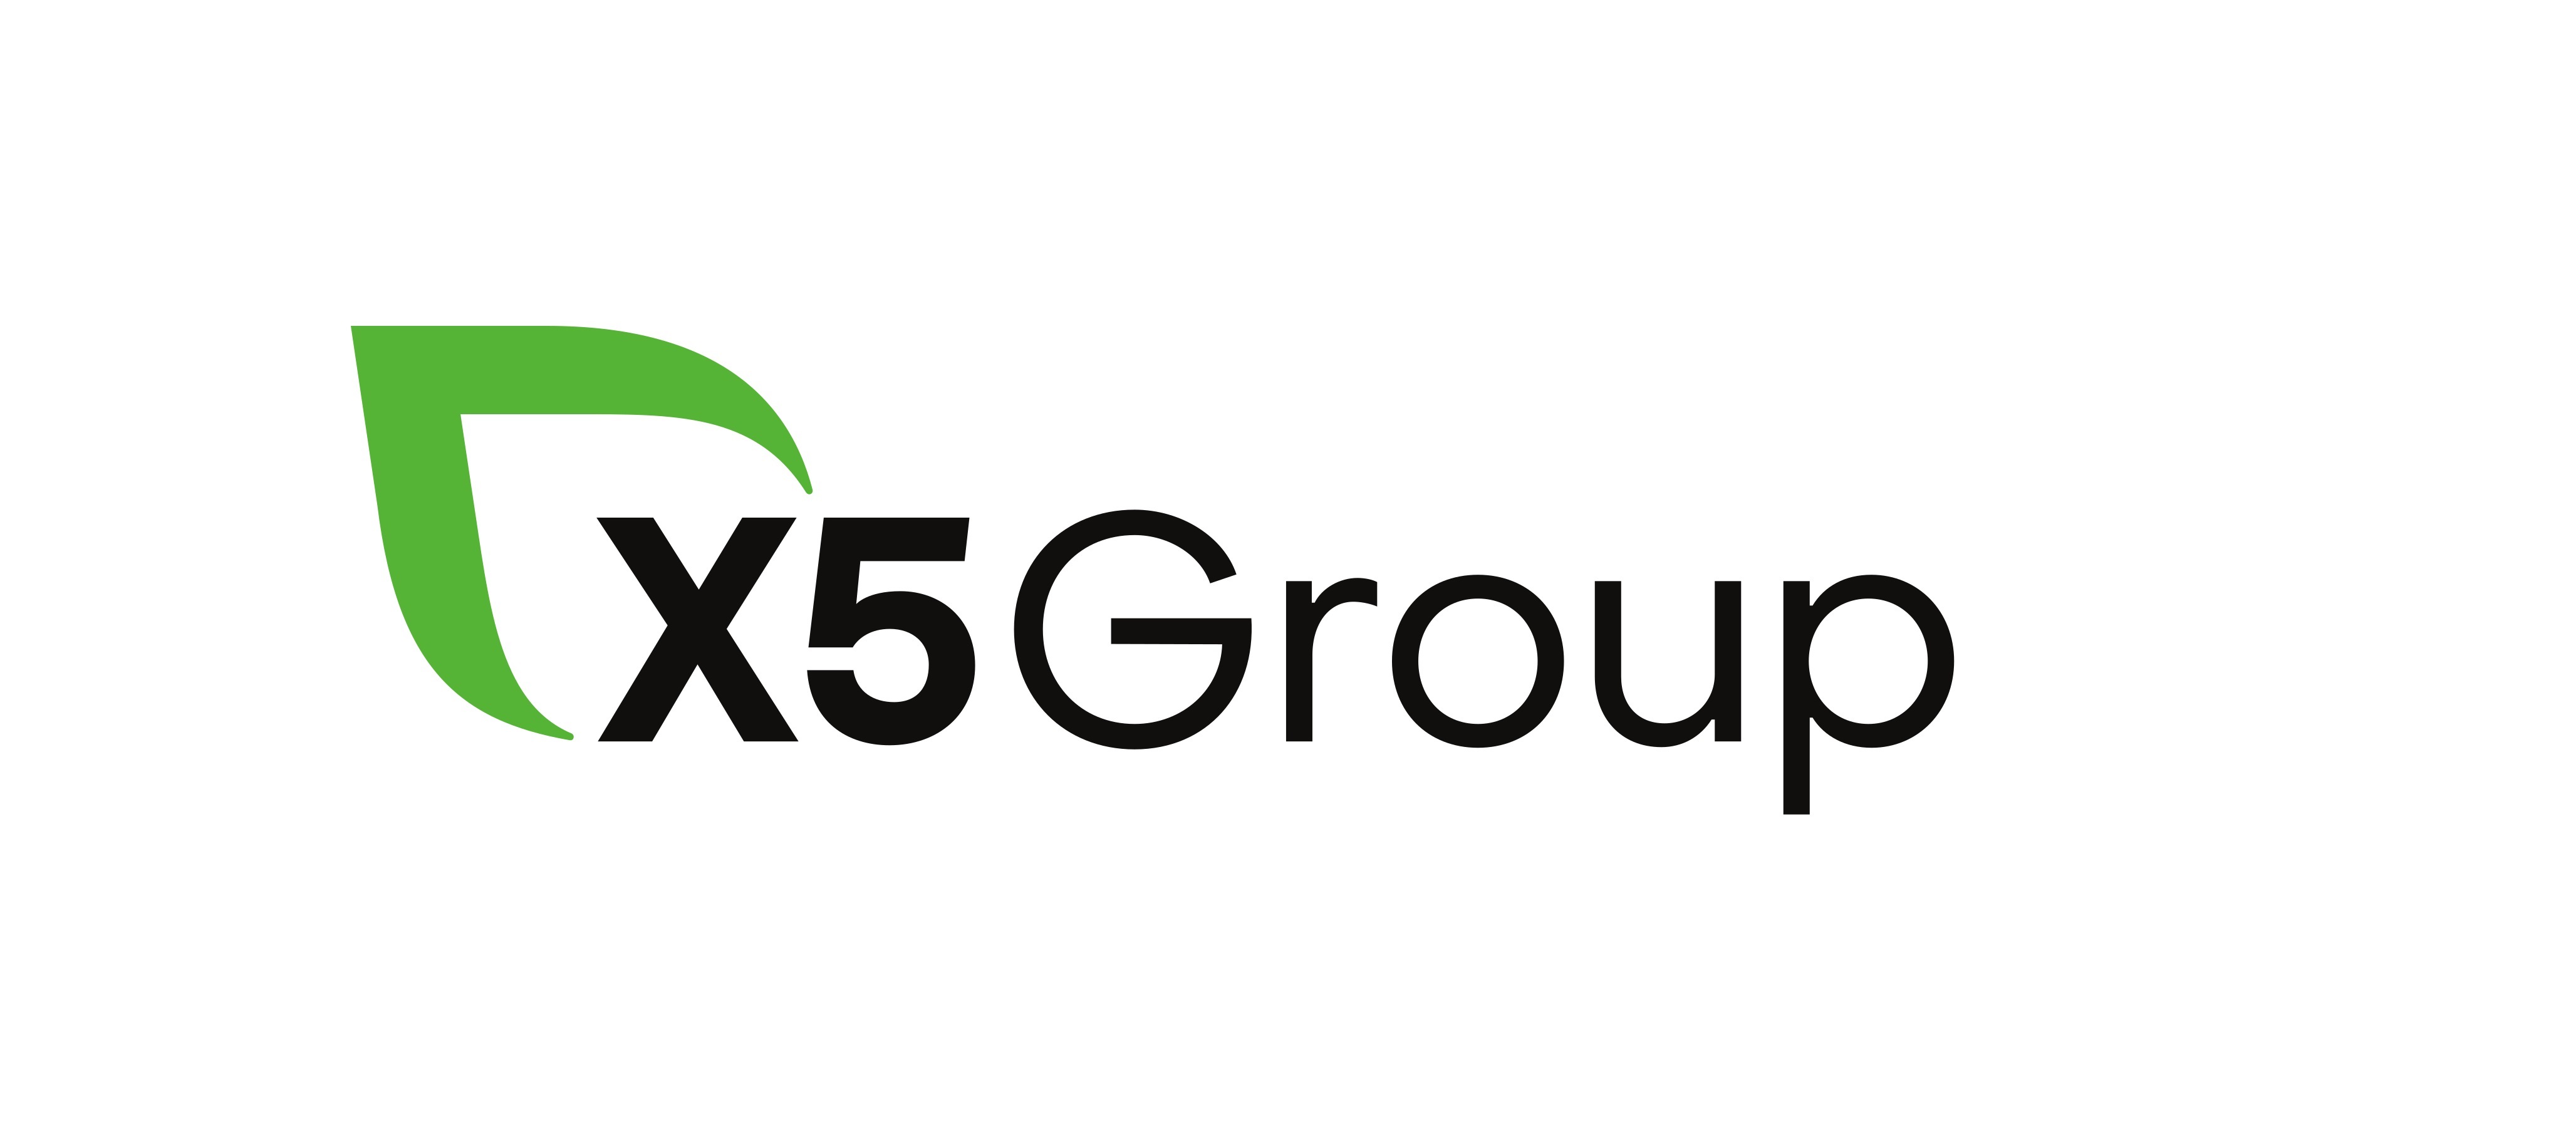 X5 transport. X5 Group логотип. X5 Retail Group logo. X5 Retail Group лого. X5 Retail Group бренды.